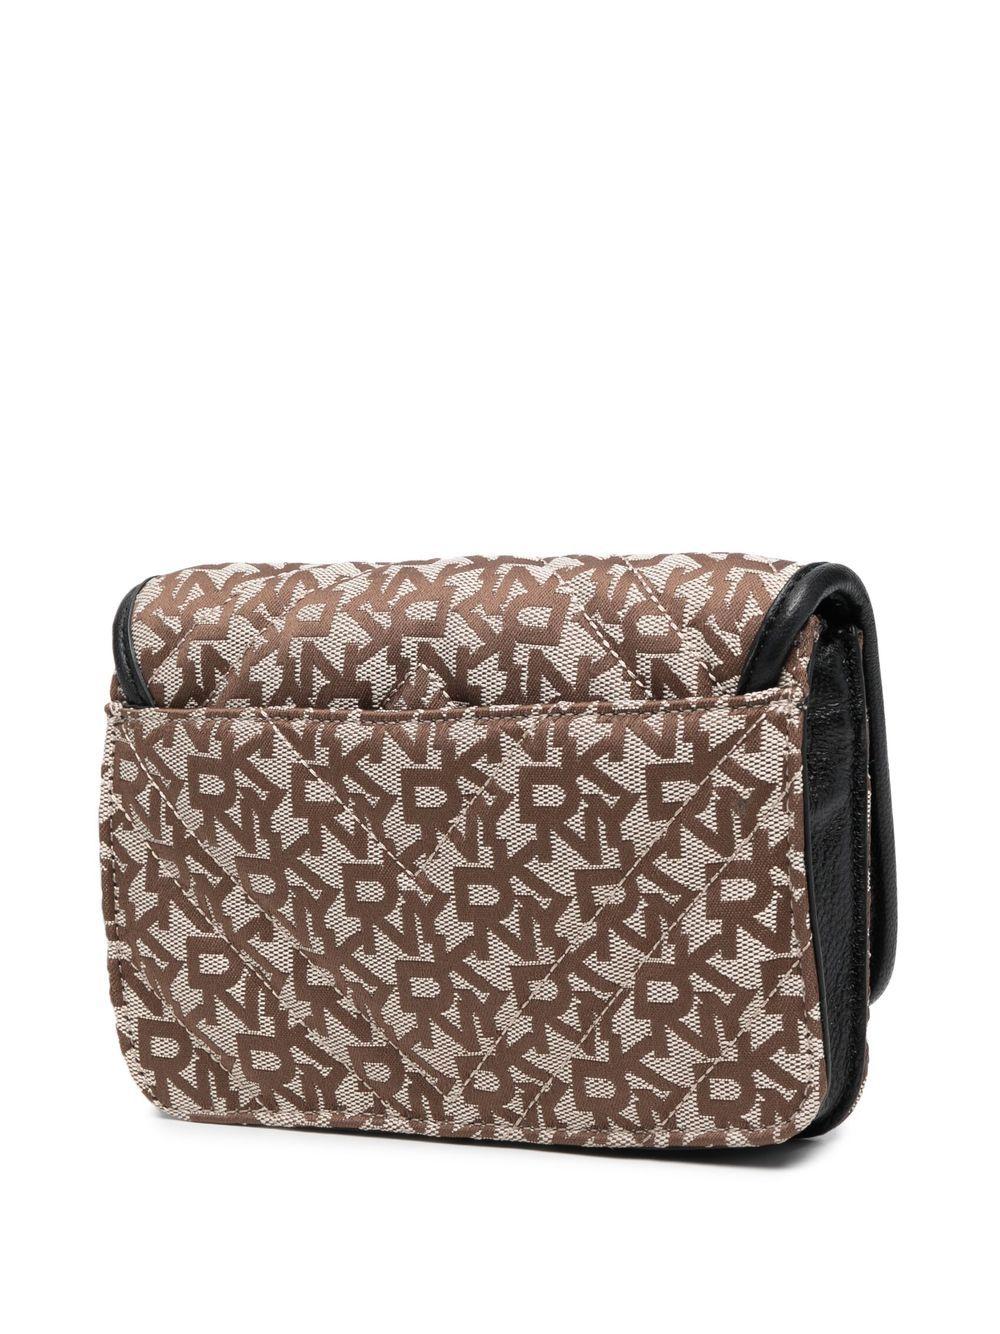 DKNY Shoulder Bag in Brown | Lyst